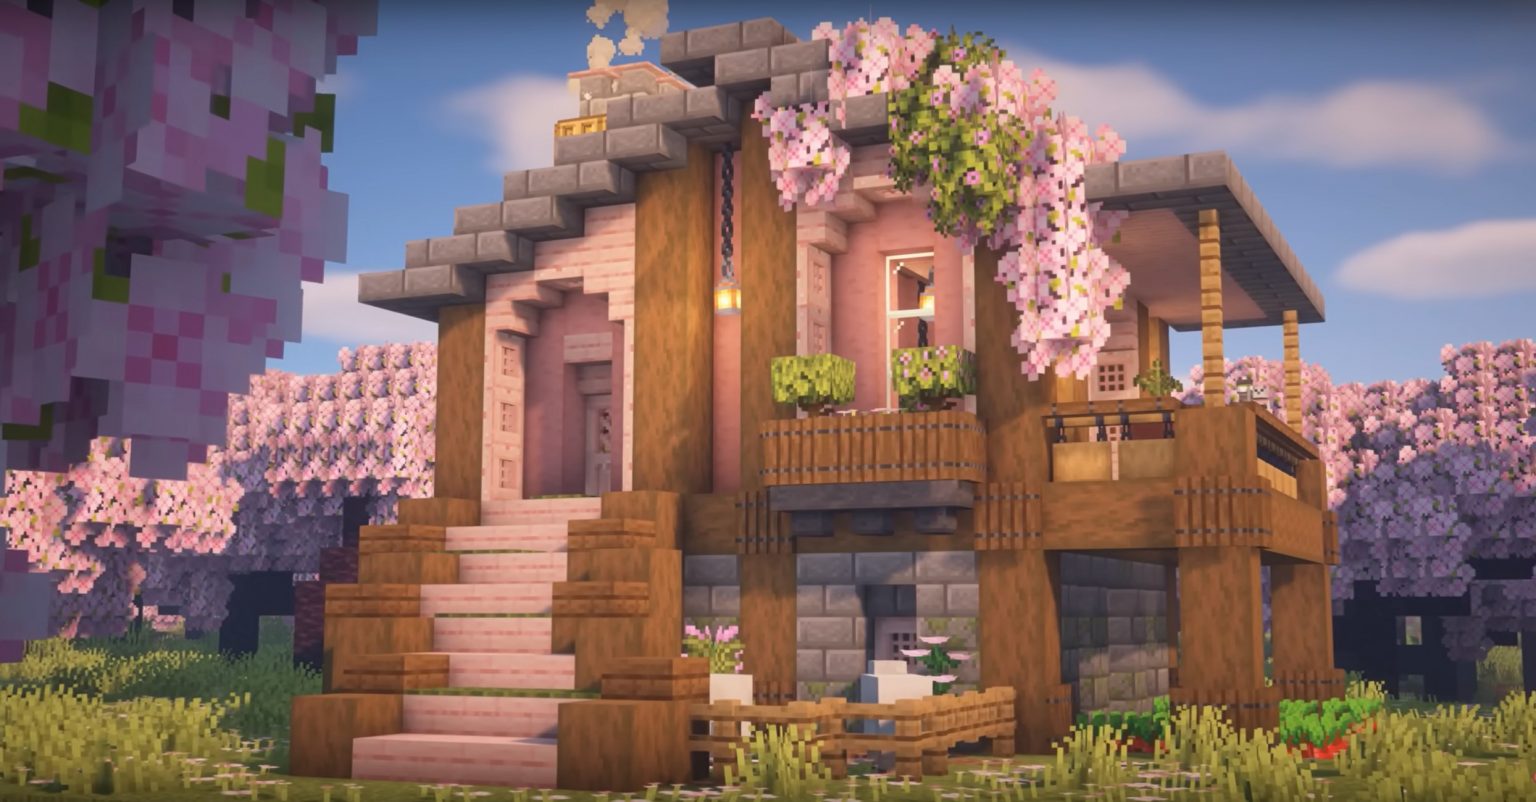 Minecraft Cherry Blossom Survival House Ideas and Design